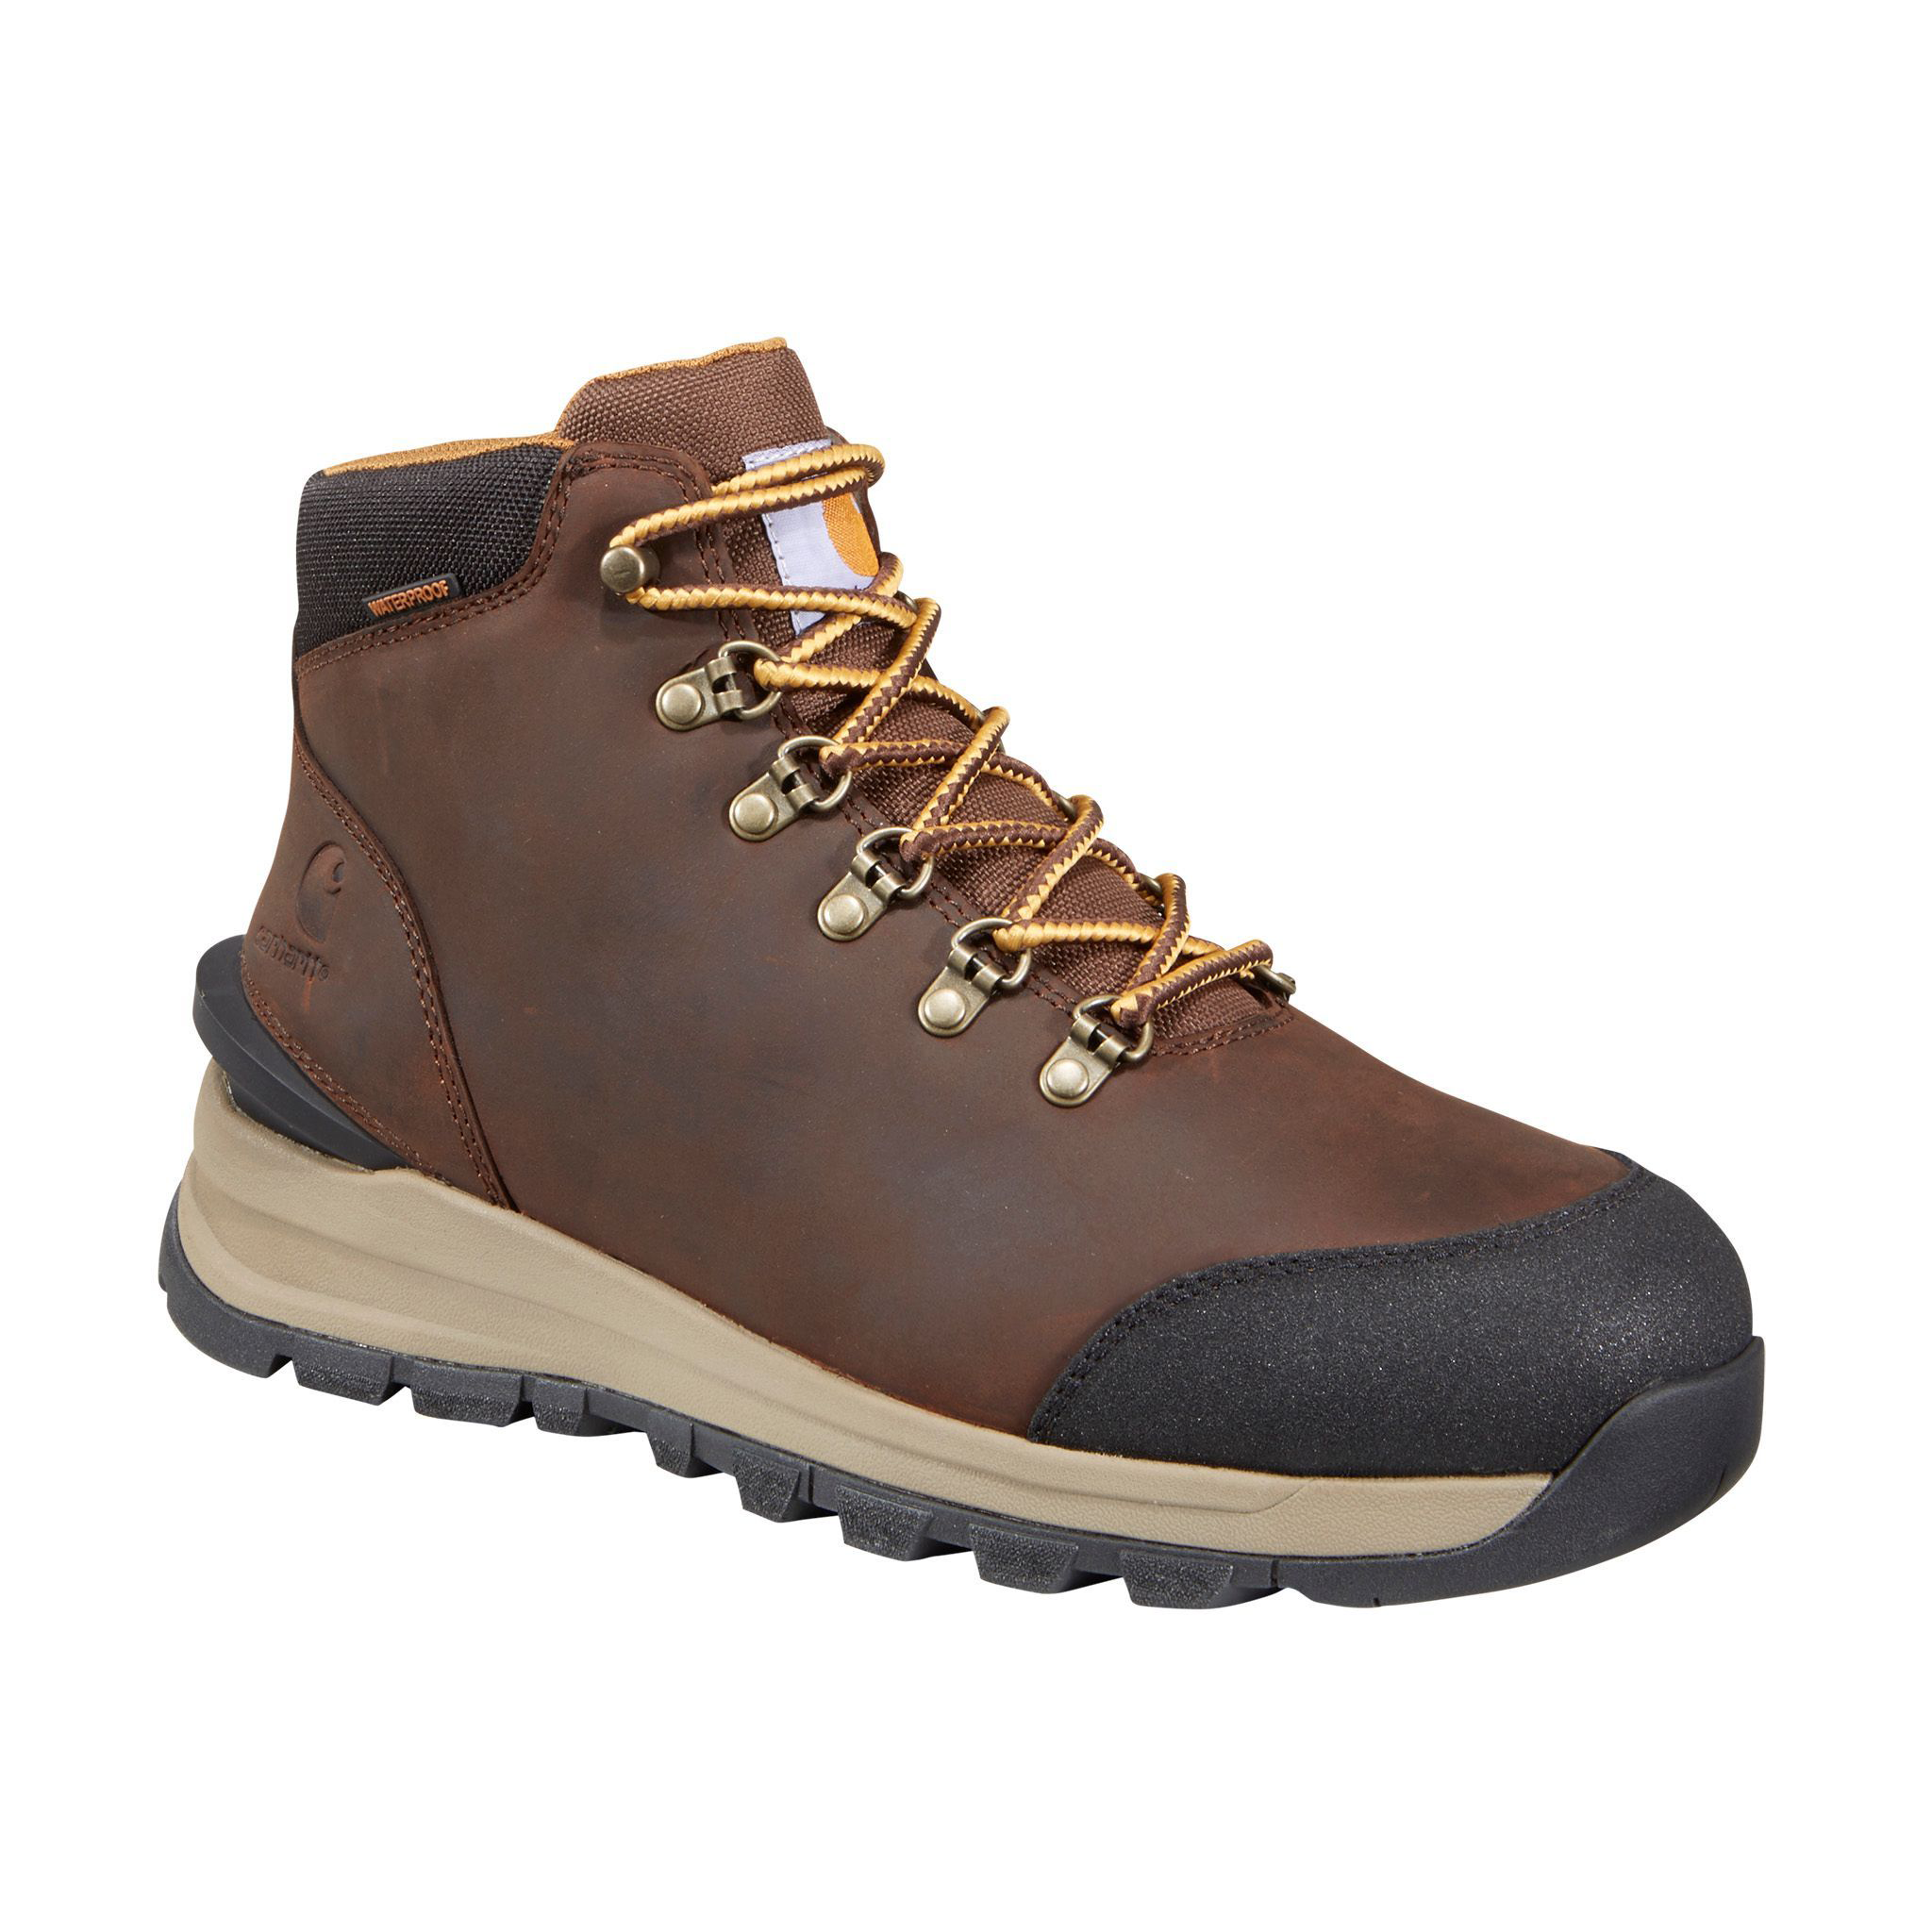 Carhartt Gilmore Waterproof Hiking Boots for Men - Dark Brown Oil Tanned - 14W